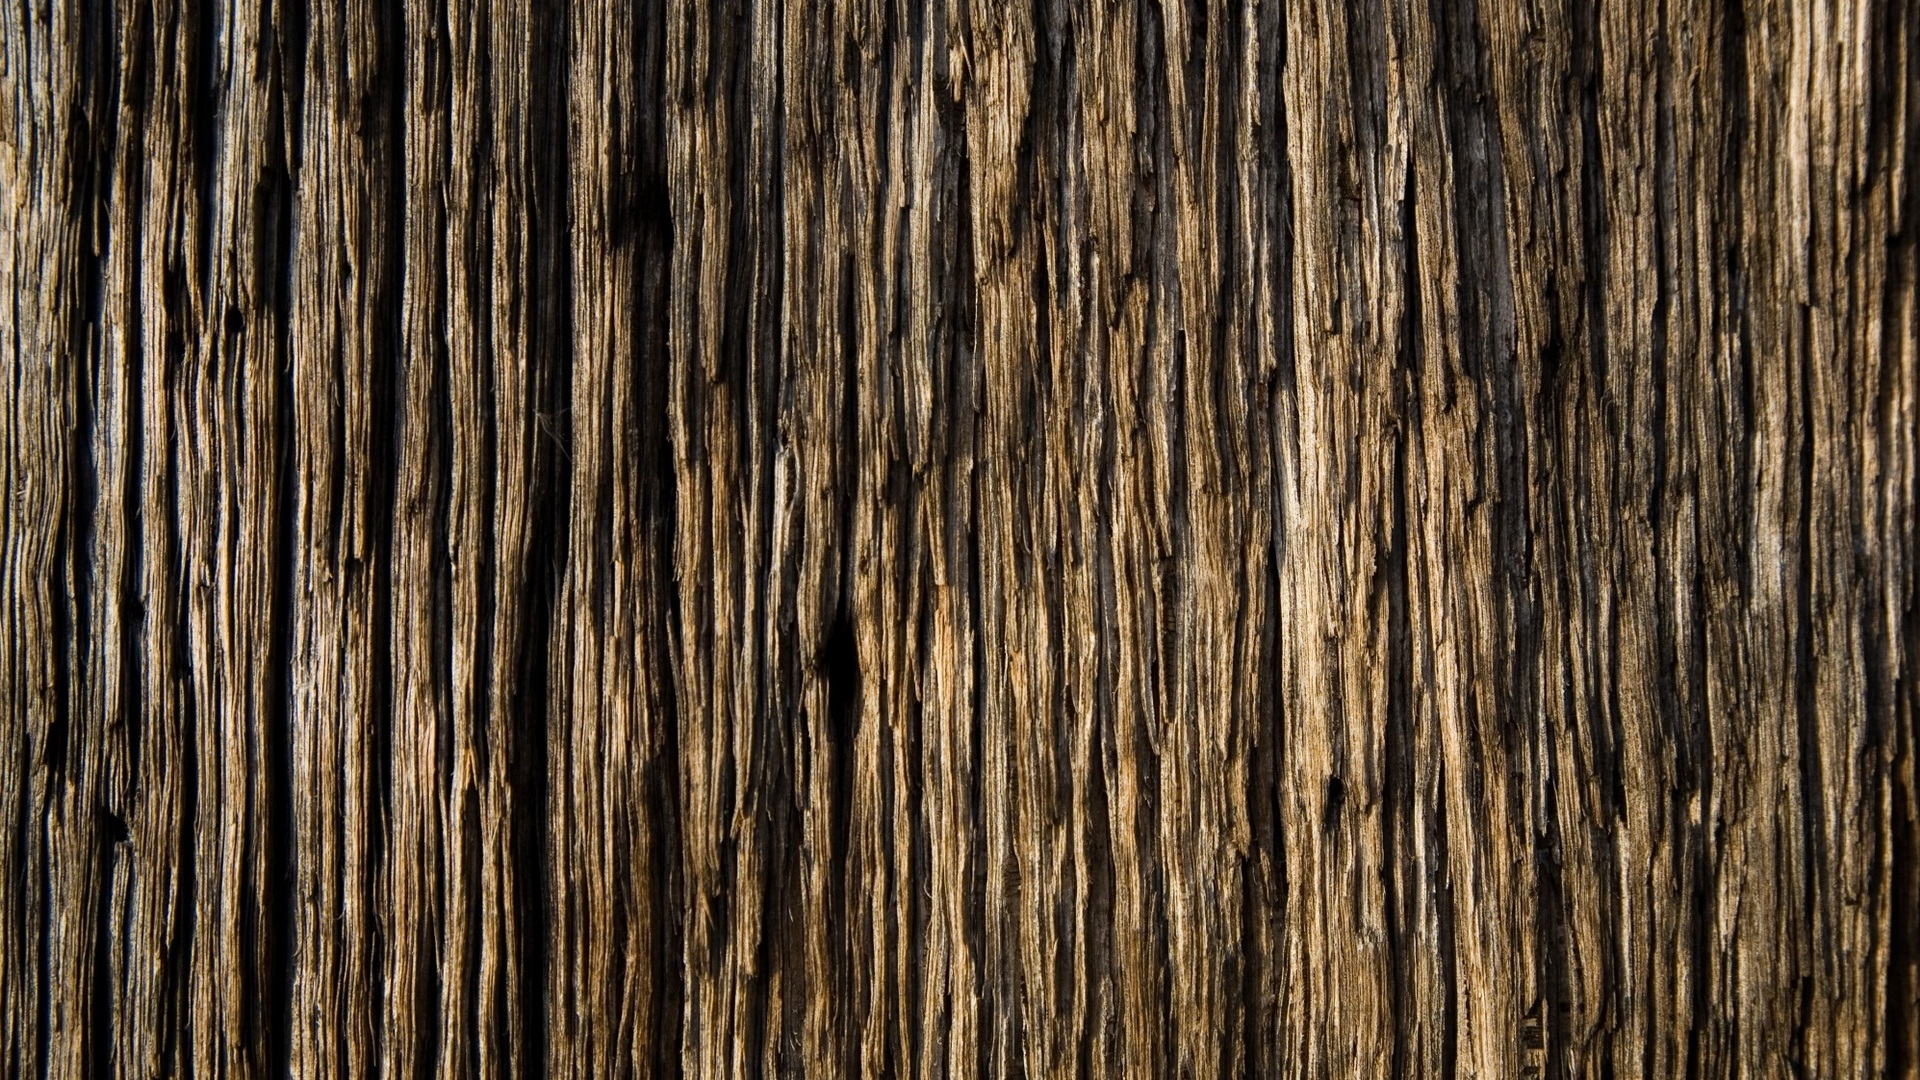 Grey dry tree bark vertical texture wallpaper  Stock image  Colourbox